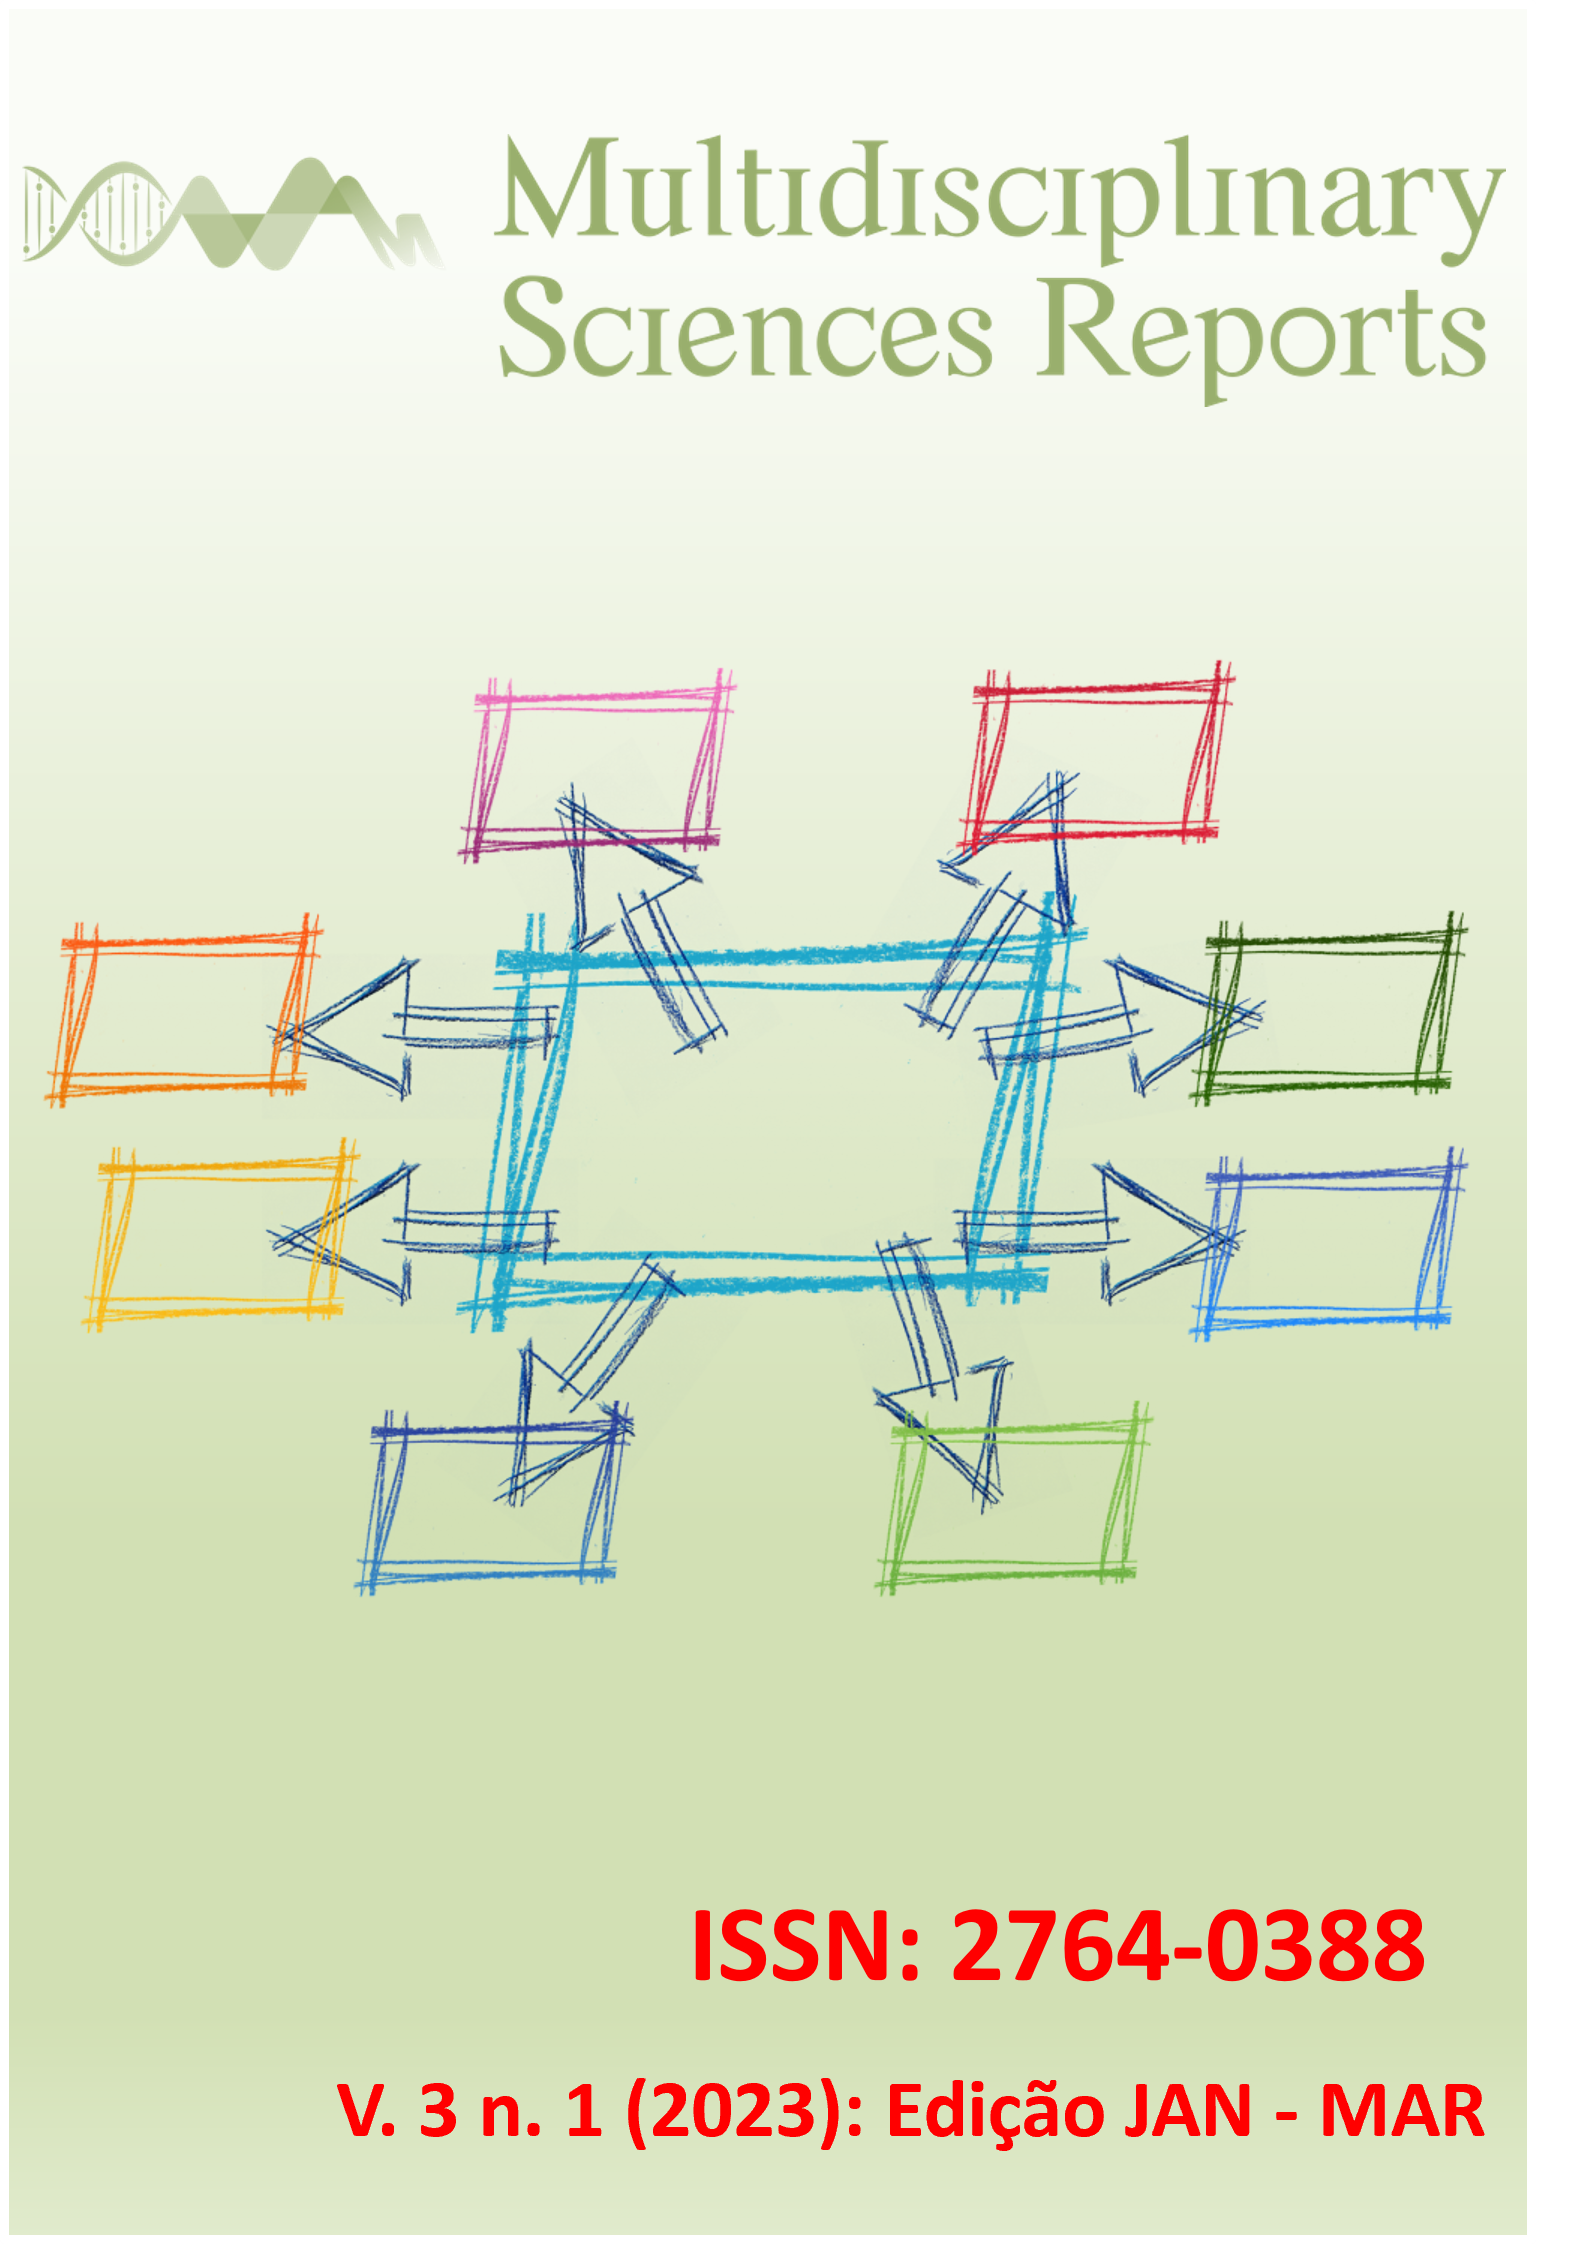 					Visualizar v. 3 n. 1 (2023): Multidisciplinary Sciences Reports
				